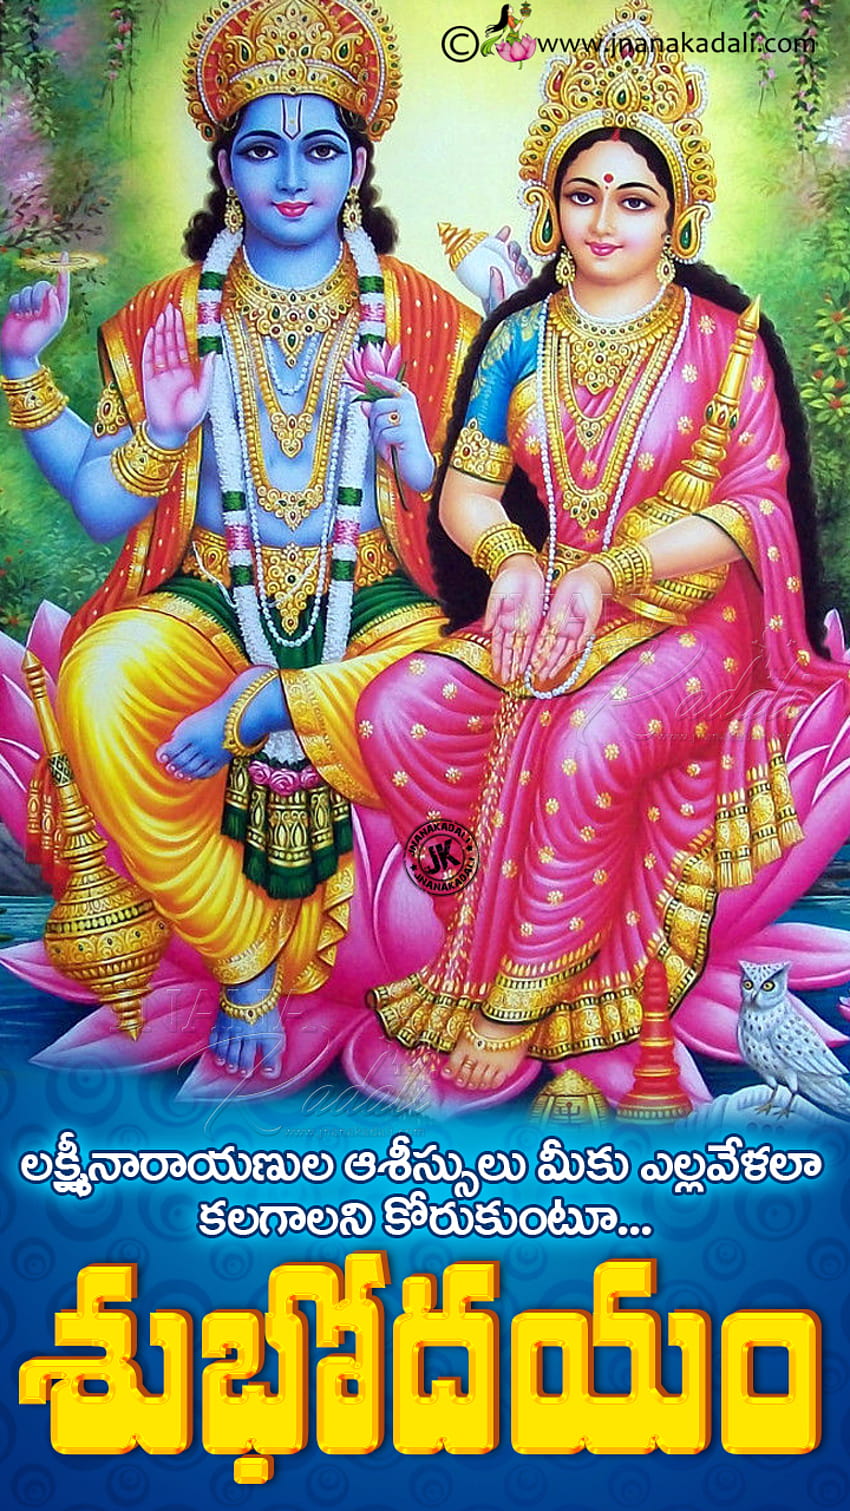 Good Morning Telugu Greetings with Lord lakshmi Vishnu in telugu ...